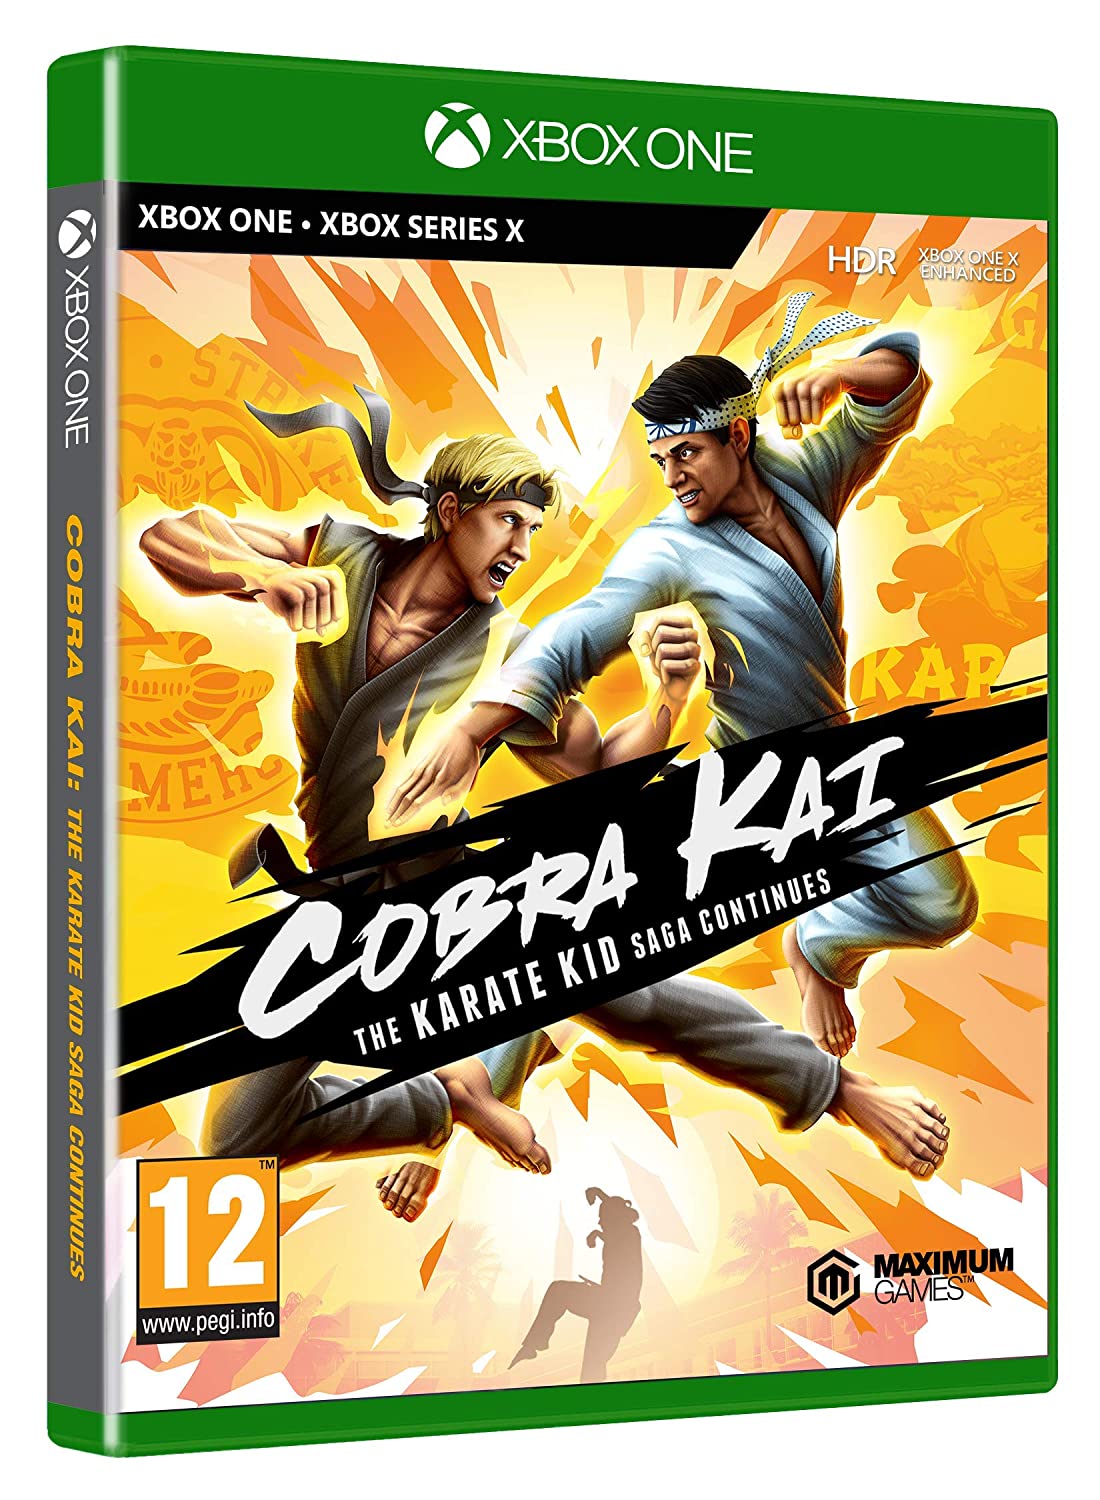 Cobra Kai: The Karate Saga Continues (EUR)